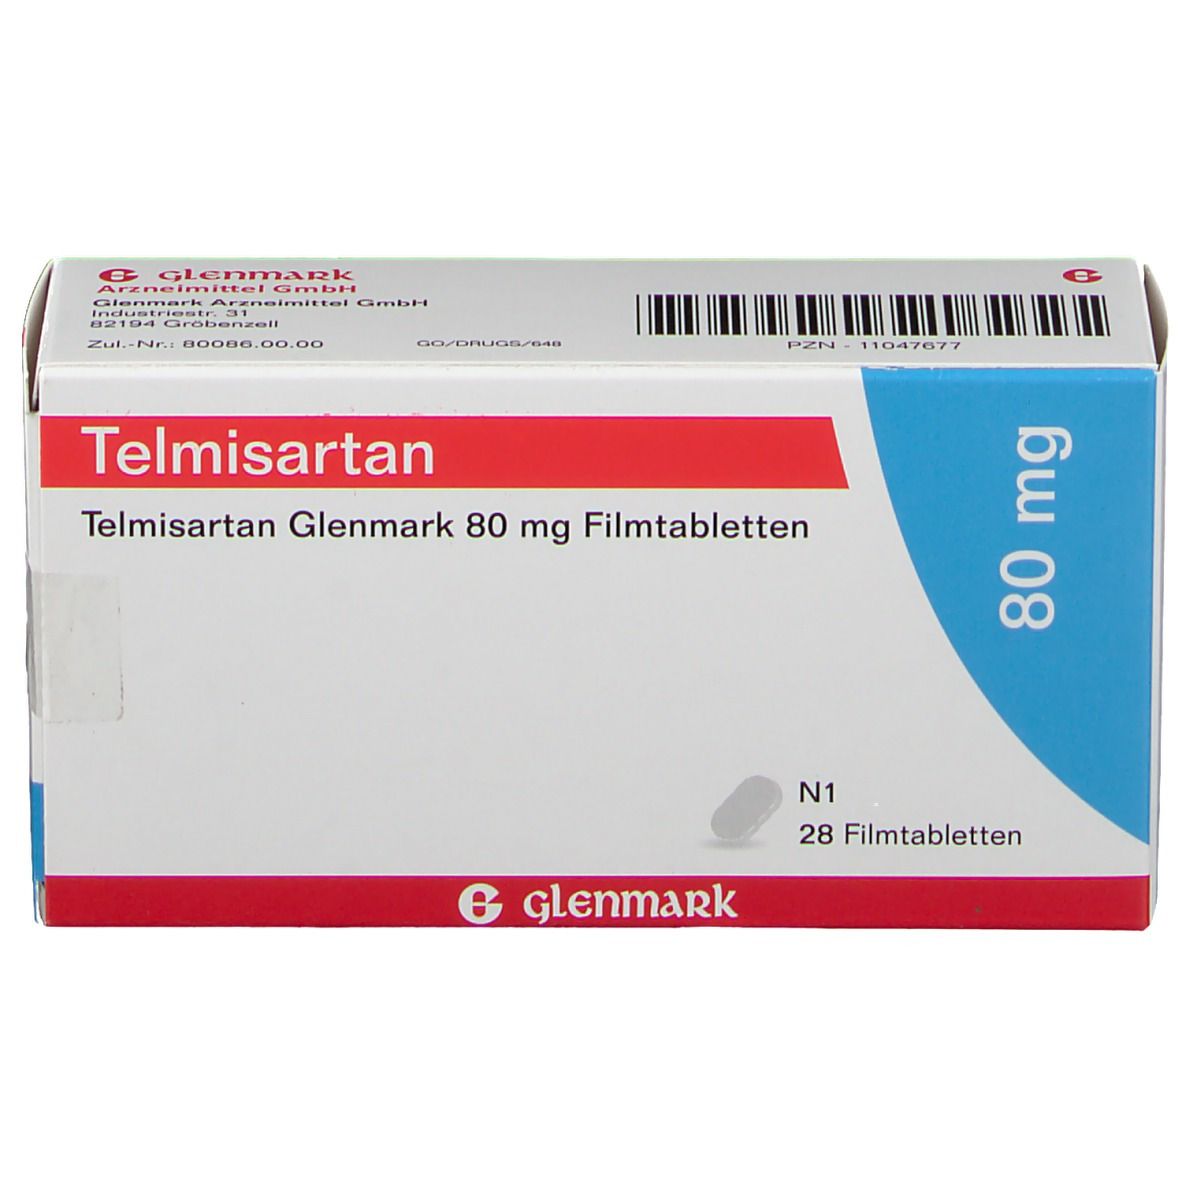 Telmisartan Glenmark 80 mg